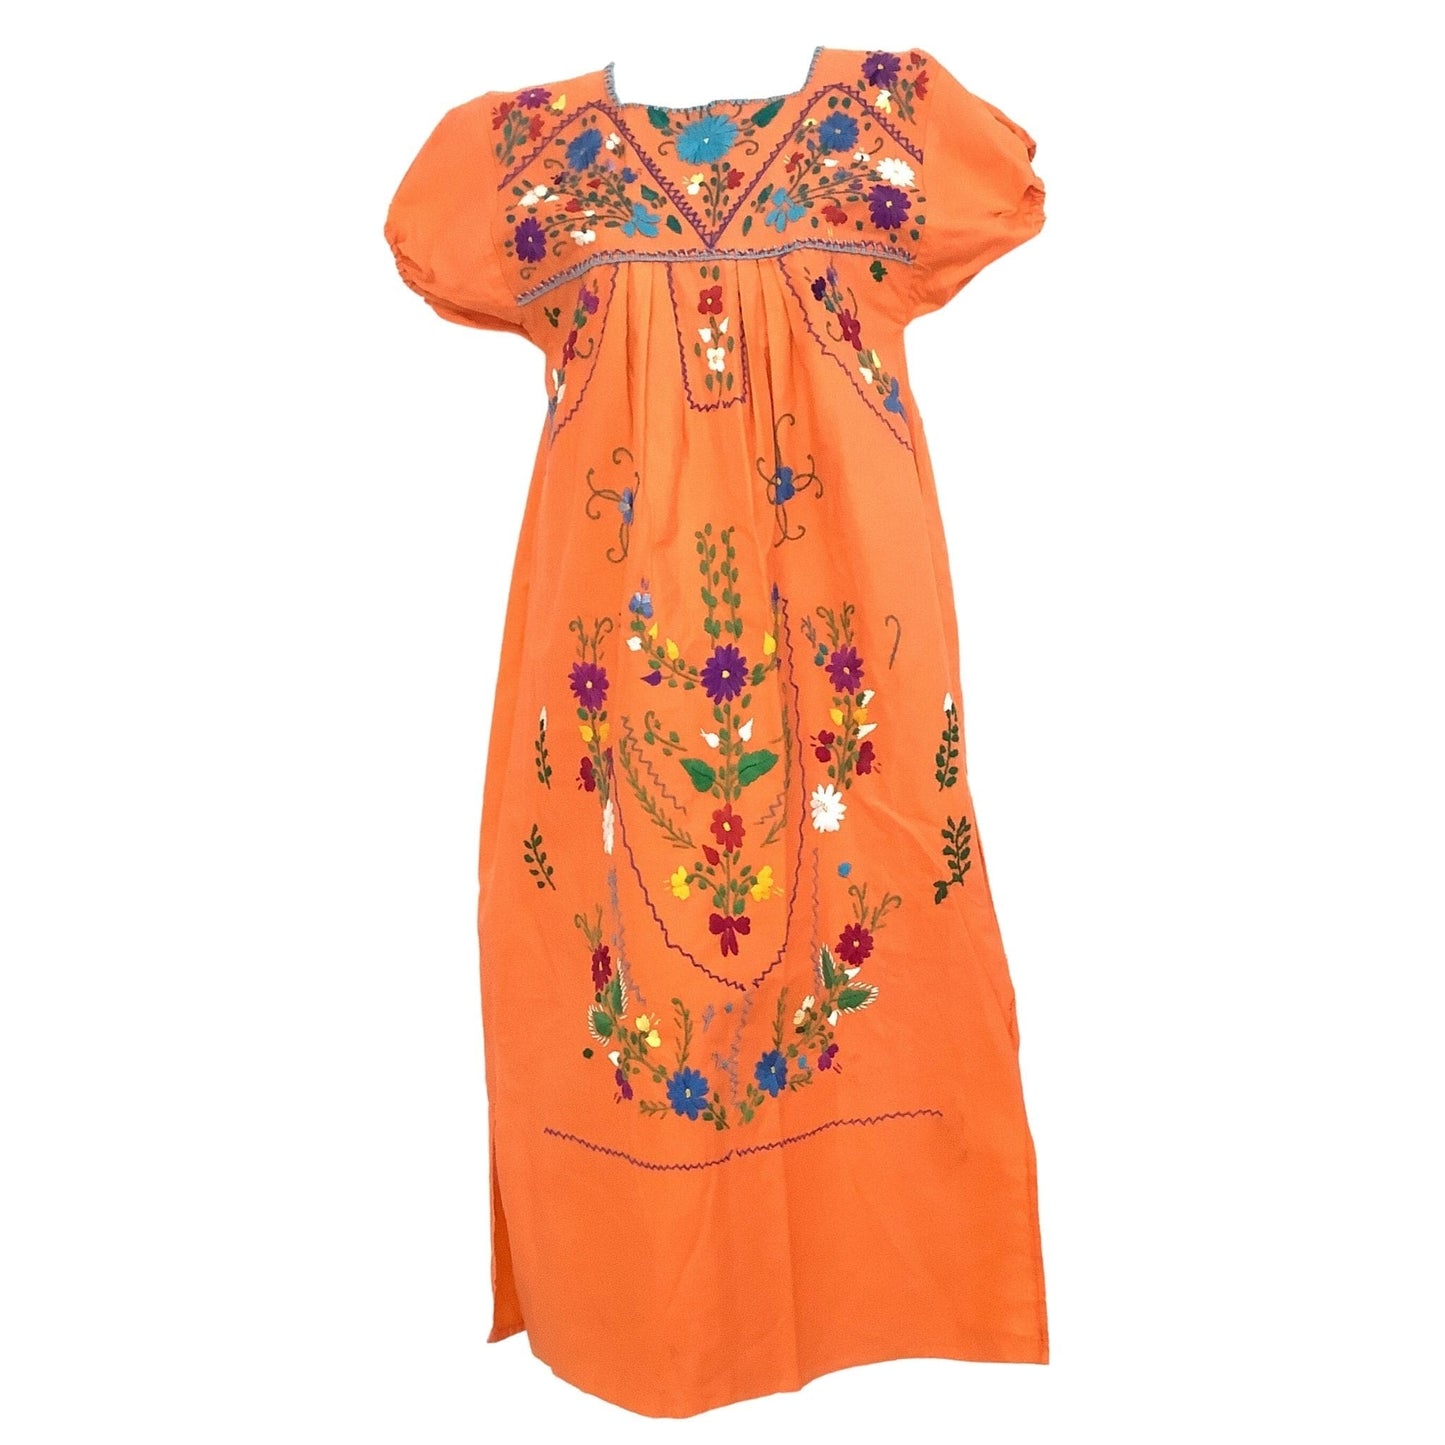 Embroidered Peasant Dress Small / Orange / Vintage 1970s